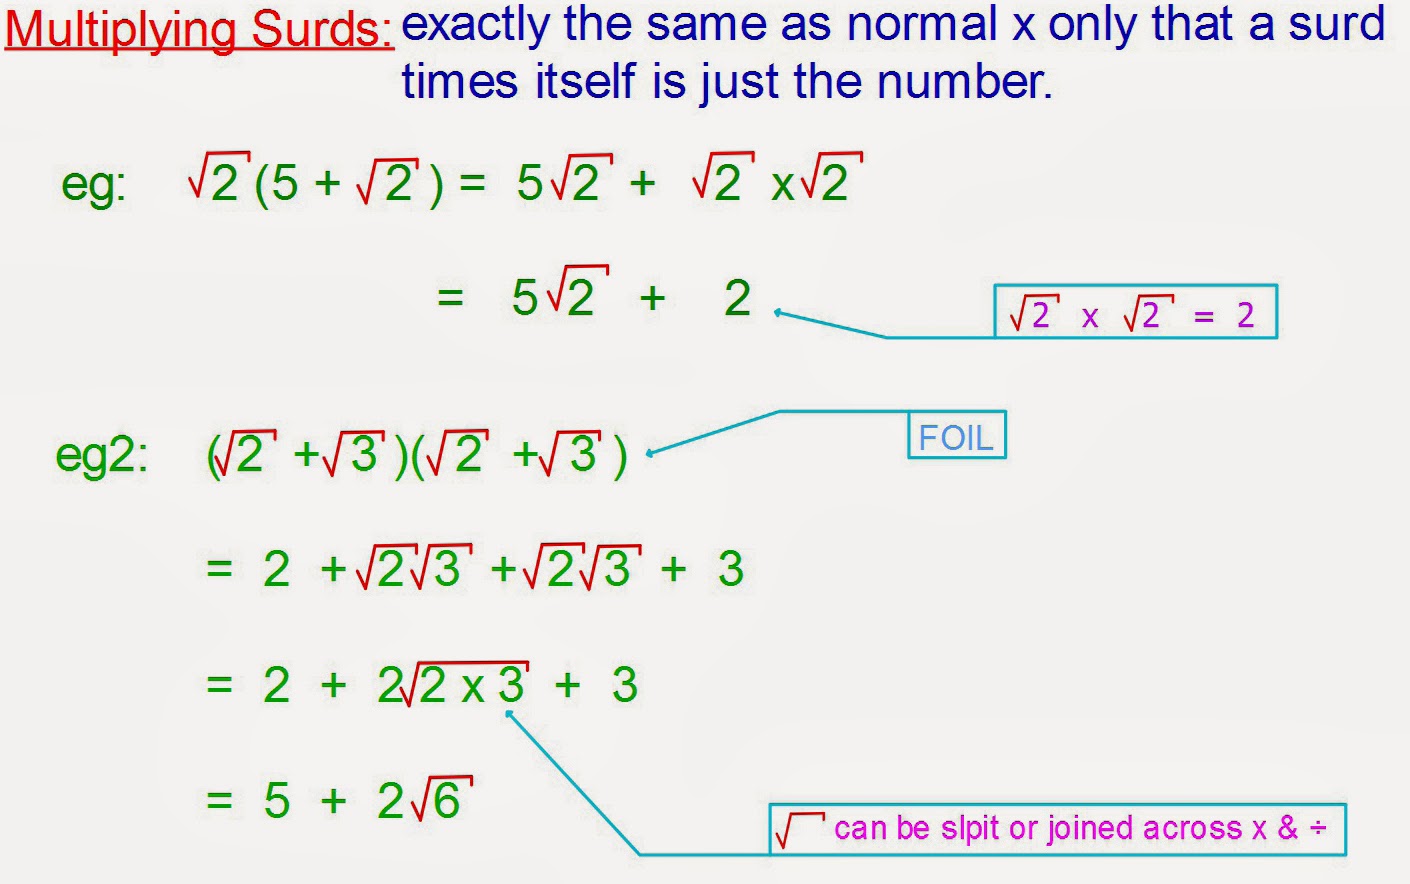 mr-rouche-s-maths-multiplying-surds